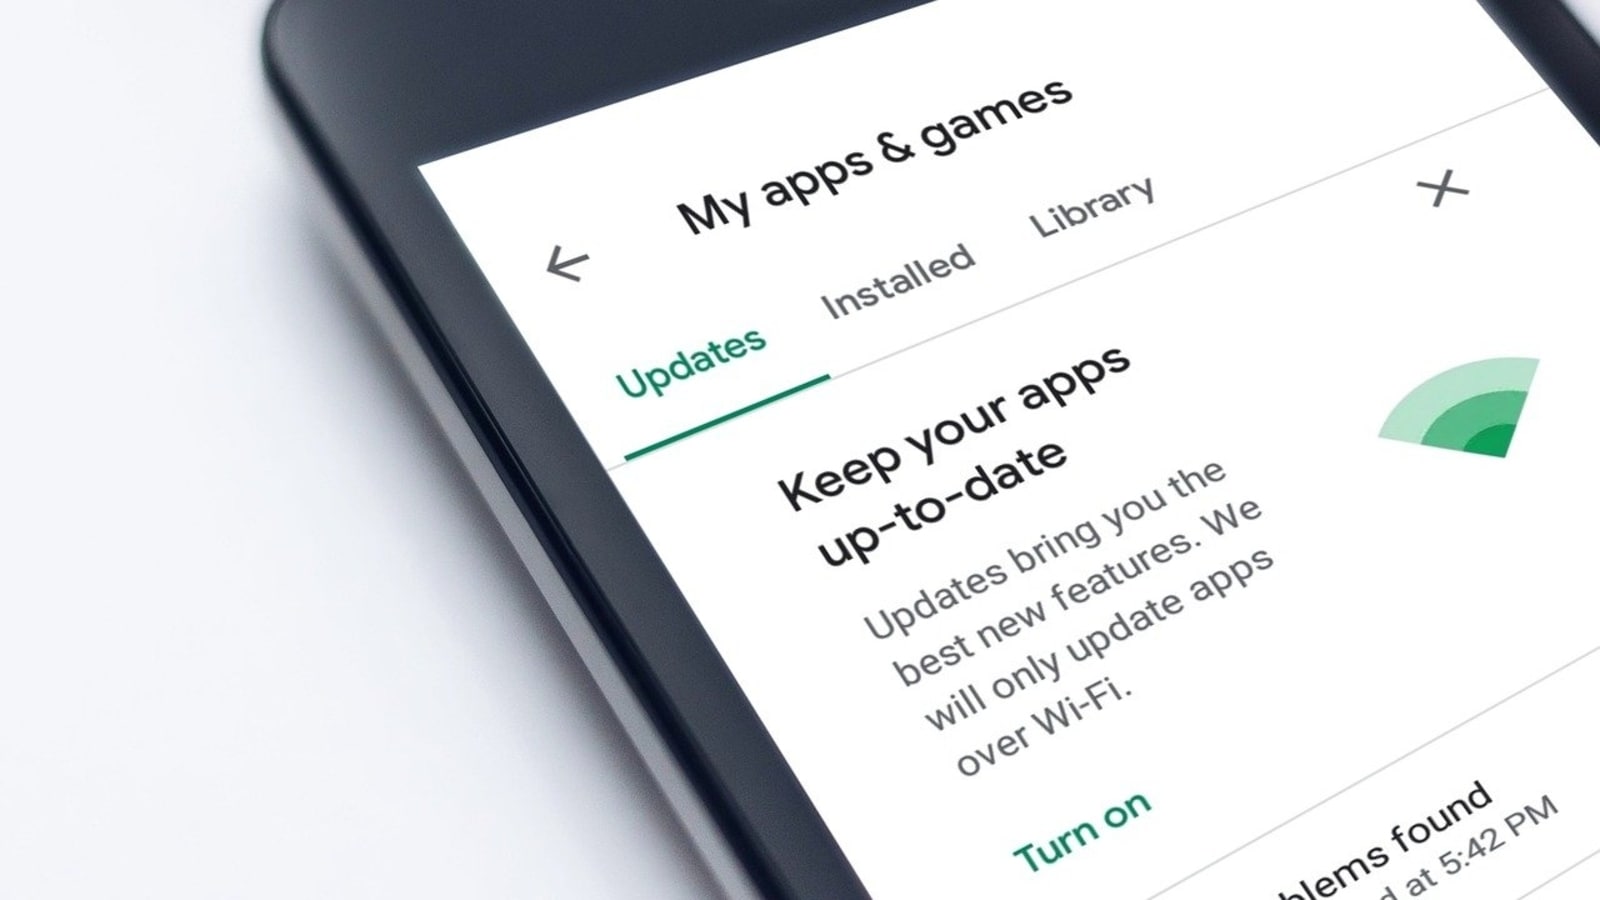 Google Play Store app leaks conversations, data via unprotected